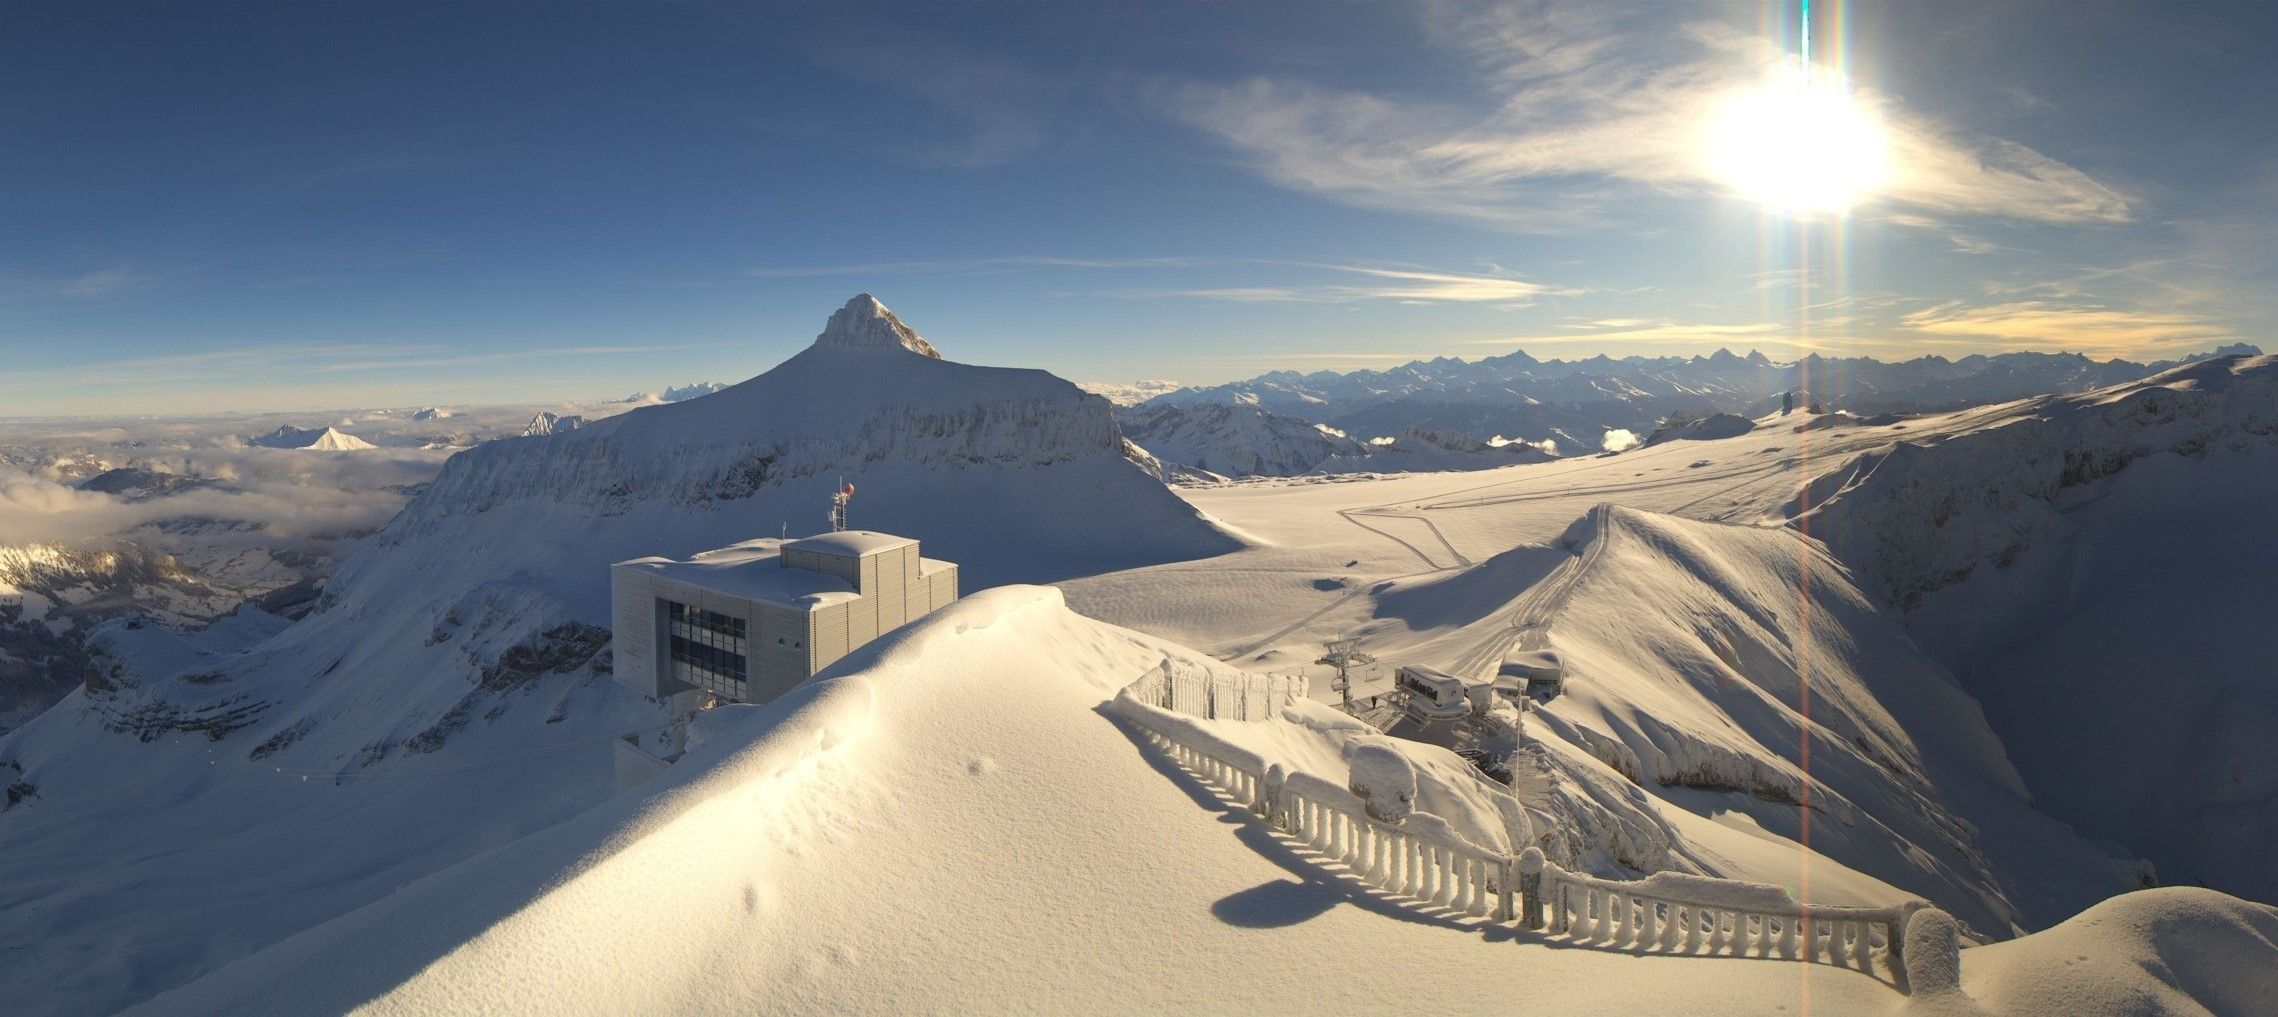 Full on winter in Switzerland (glacier3000.roundshot.com)